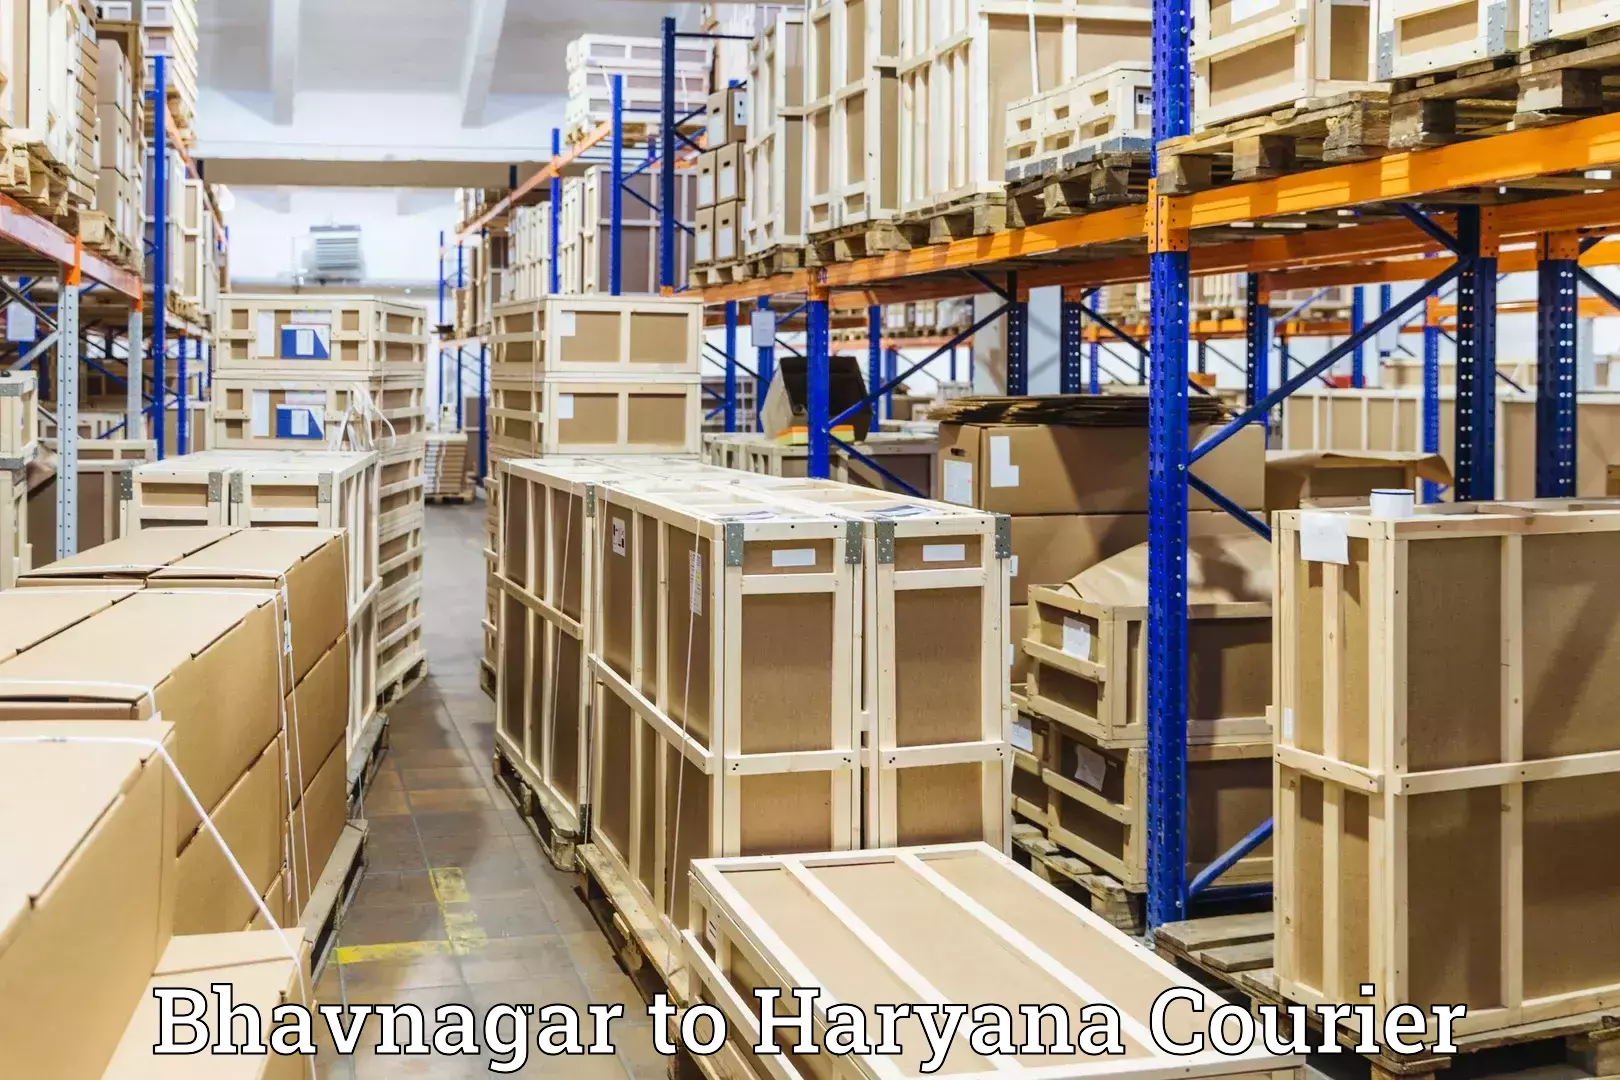 Luggage shipment specialists Bhavnagar to Bhiwani